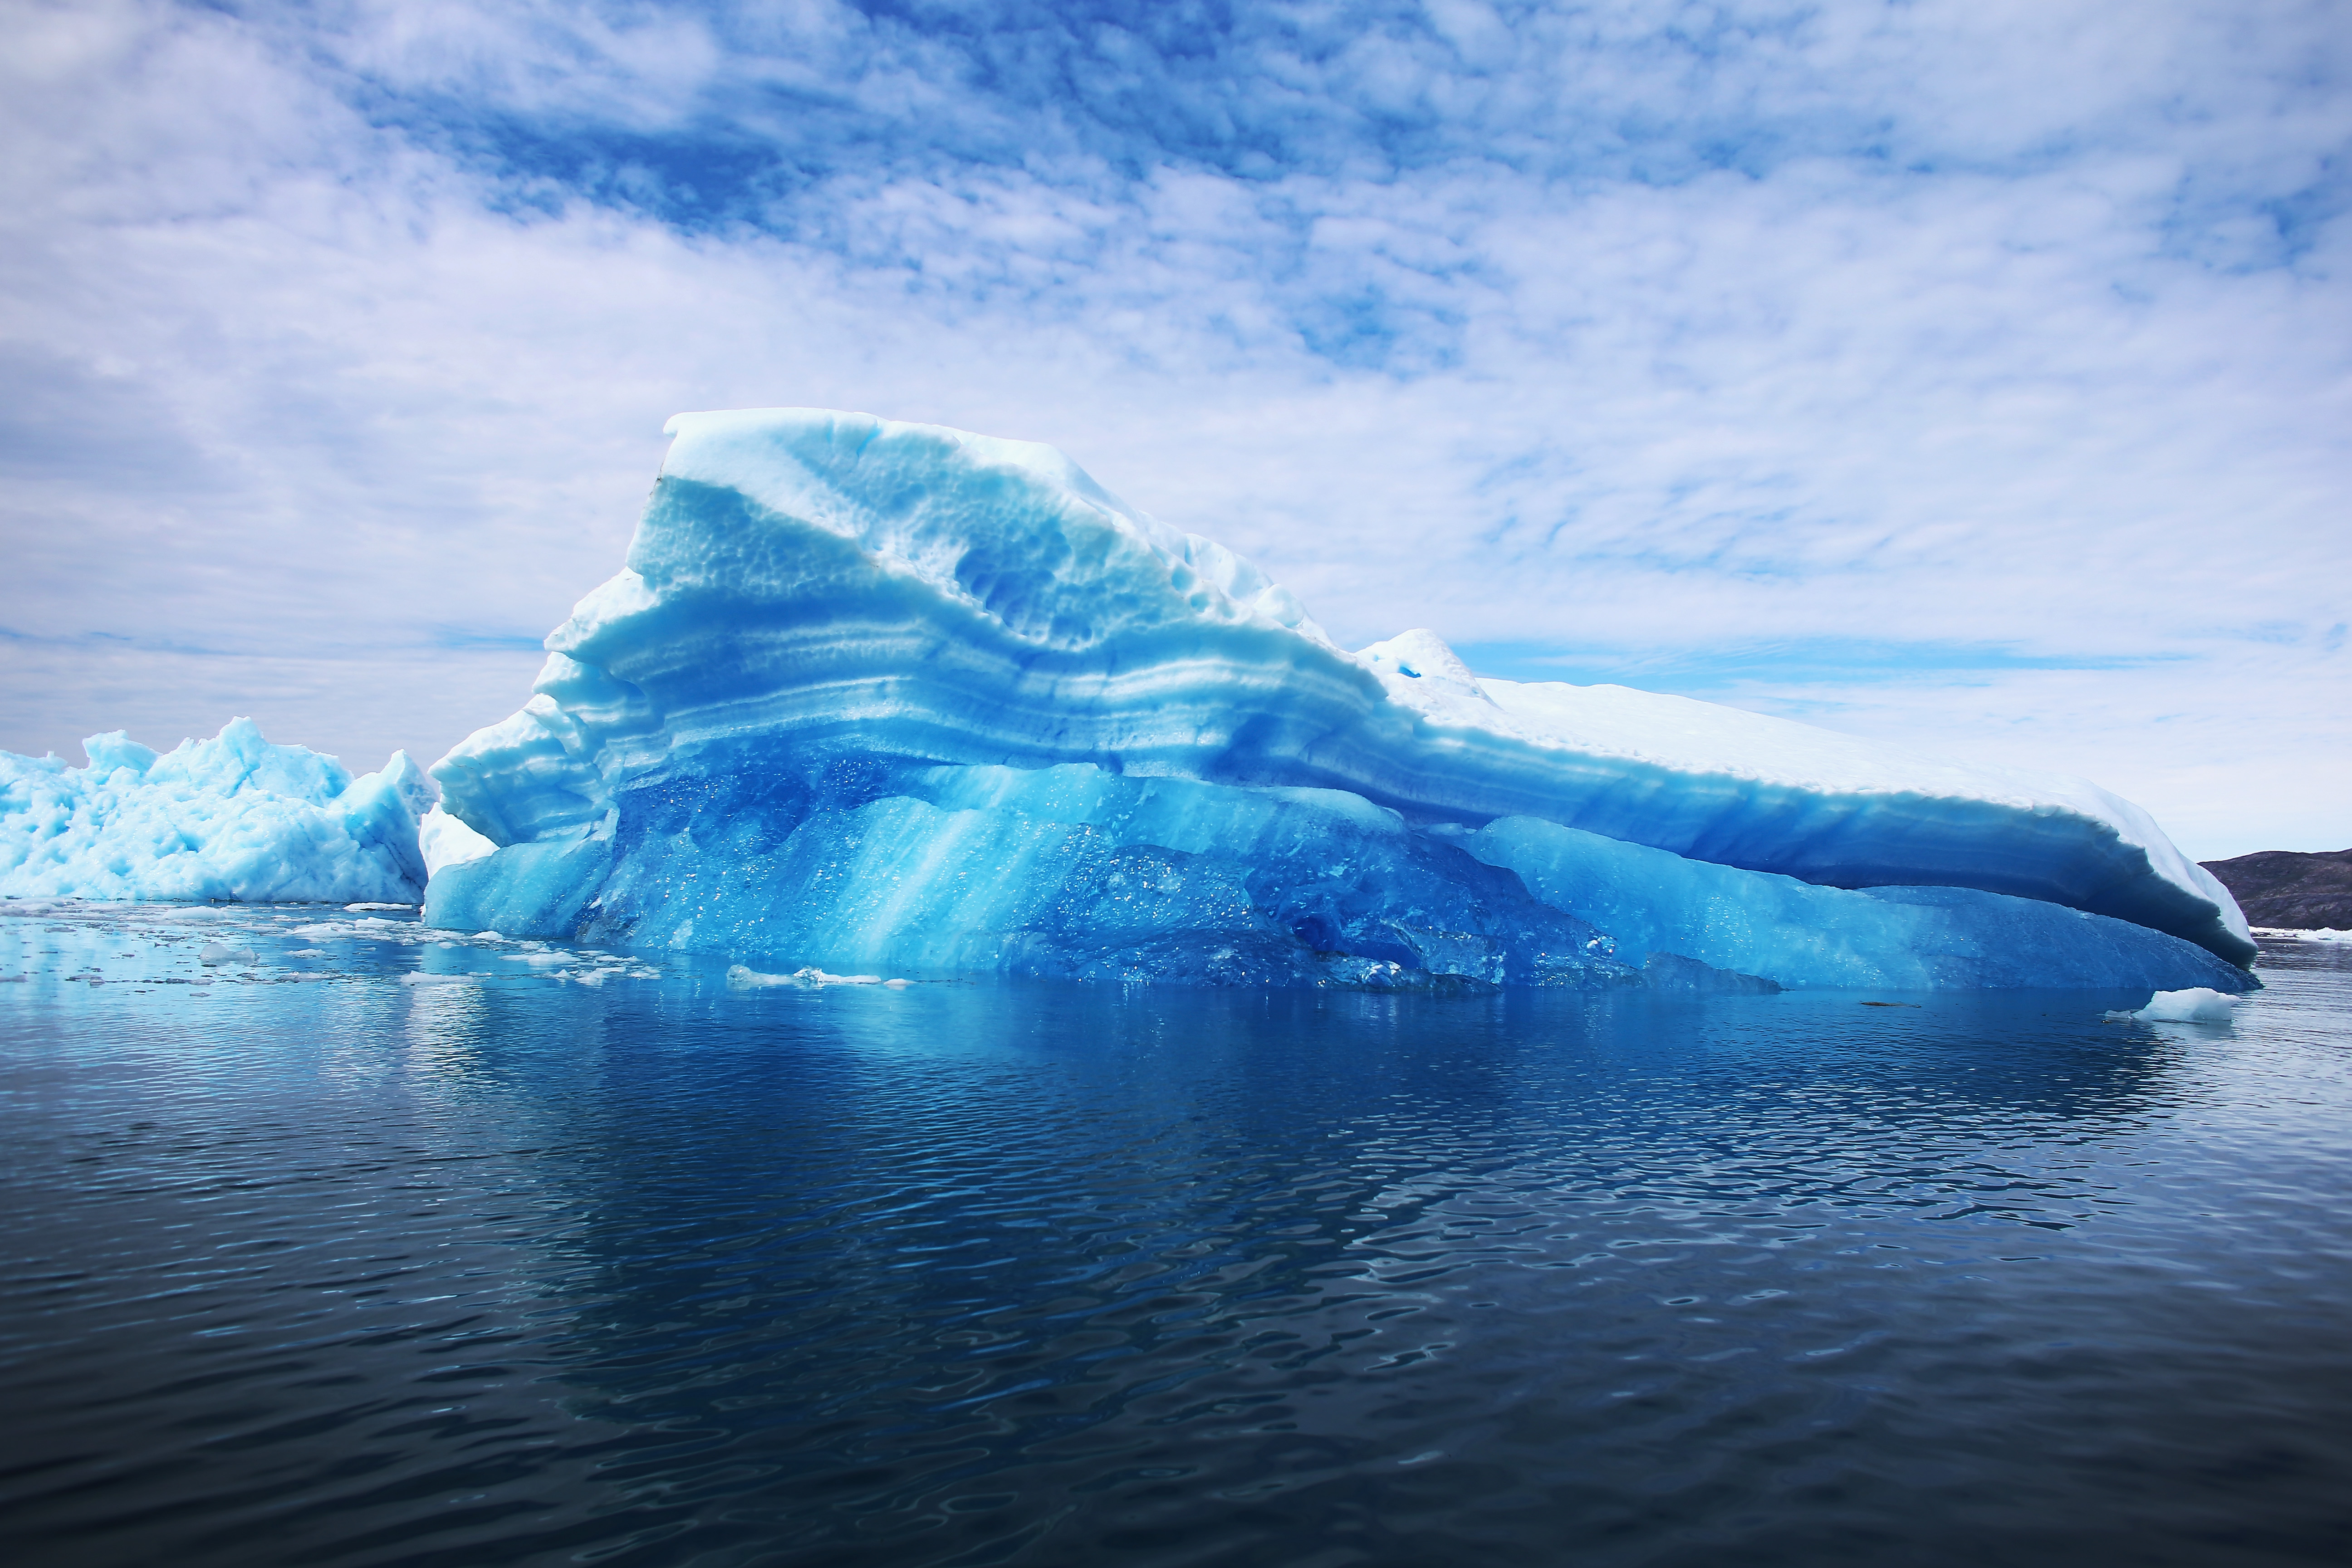 Про ледовитый океан. Арктика Северный Ледовитый океан. Айсберги Северного Ледовитого океана. Ледовитый океан Айсберг. Льды Арктики северооедовитого океана.